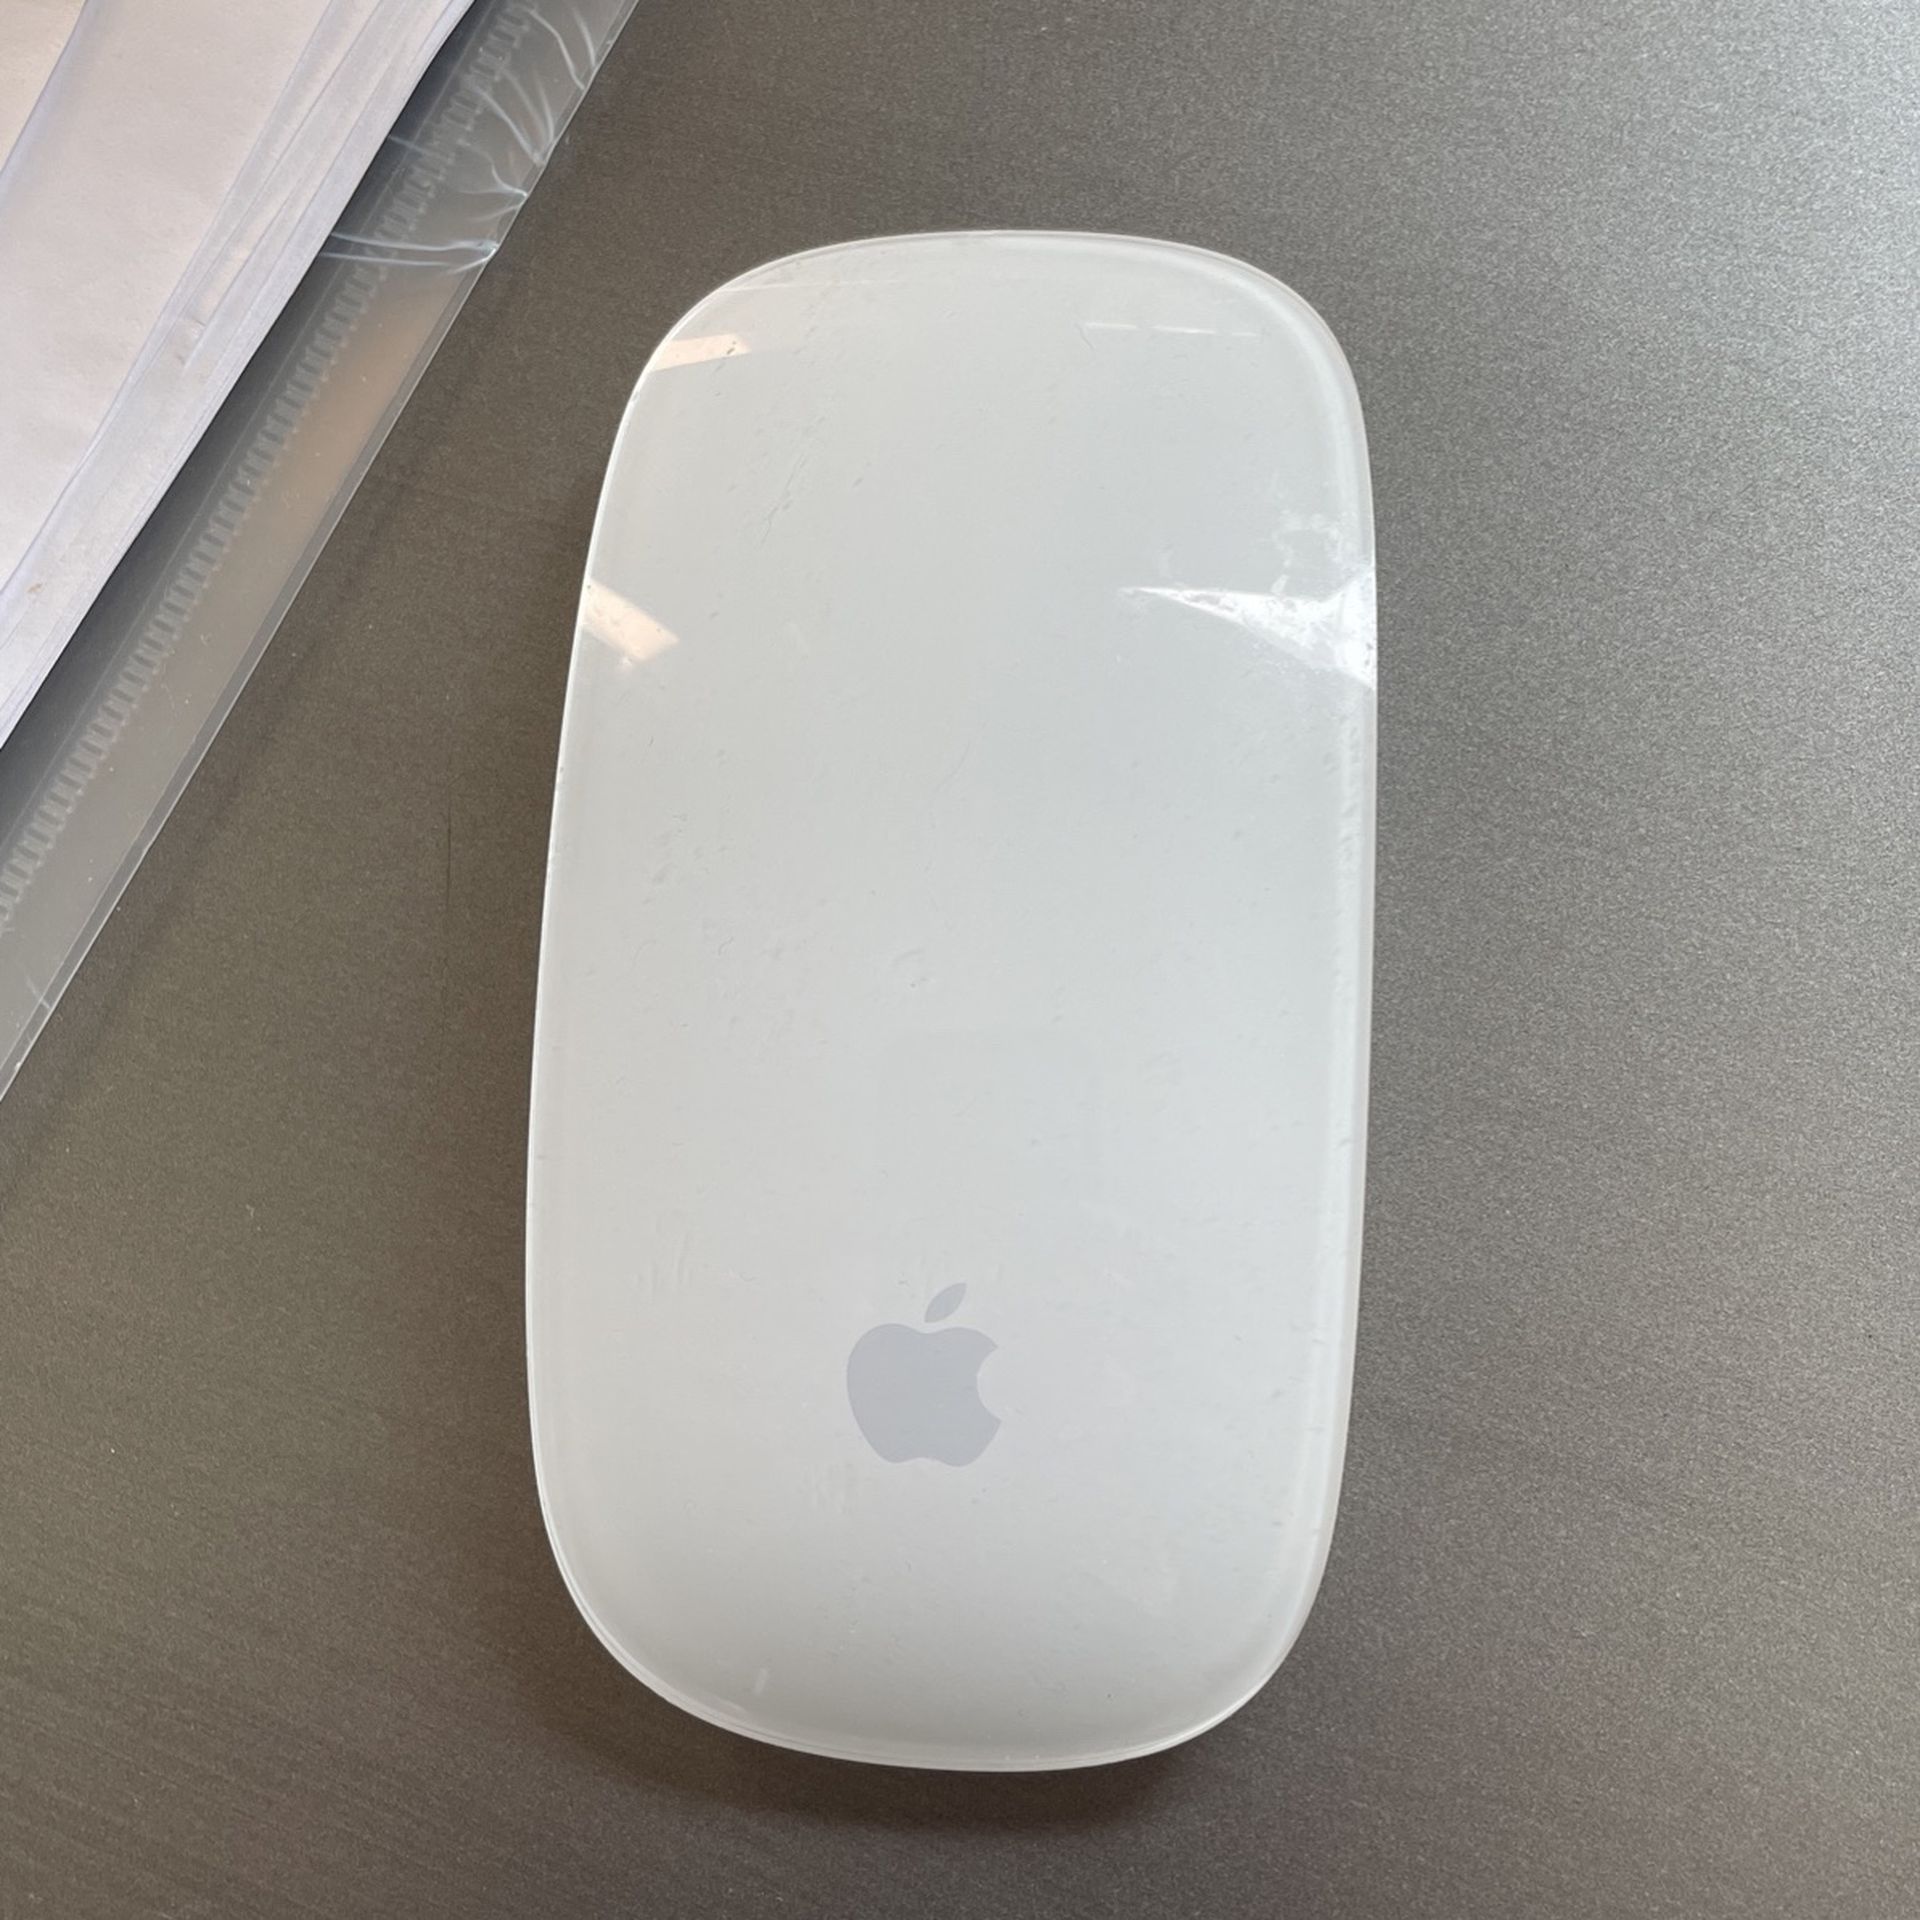 Apple Magic Mouse 1 + Rechargeable Batteries